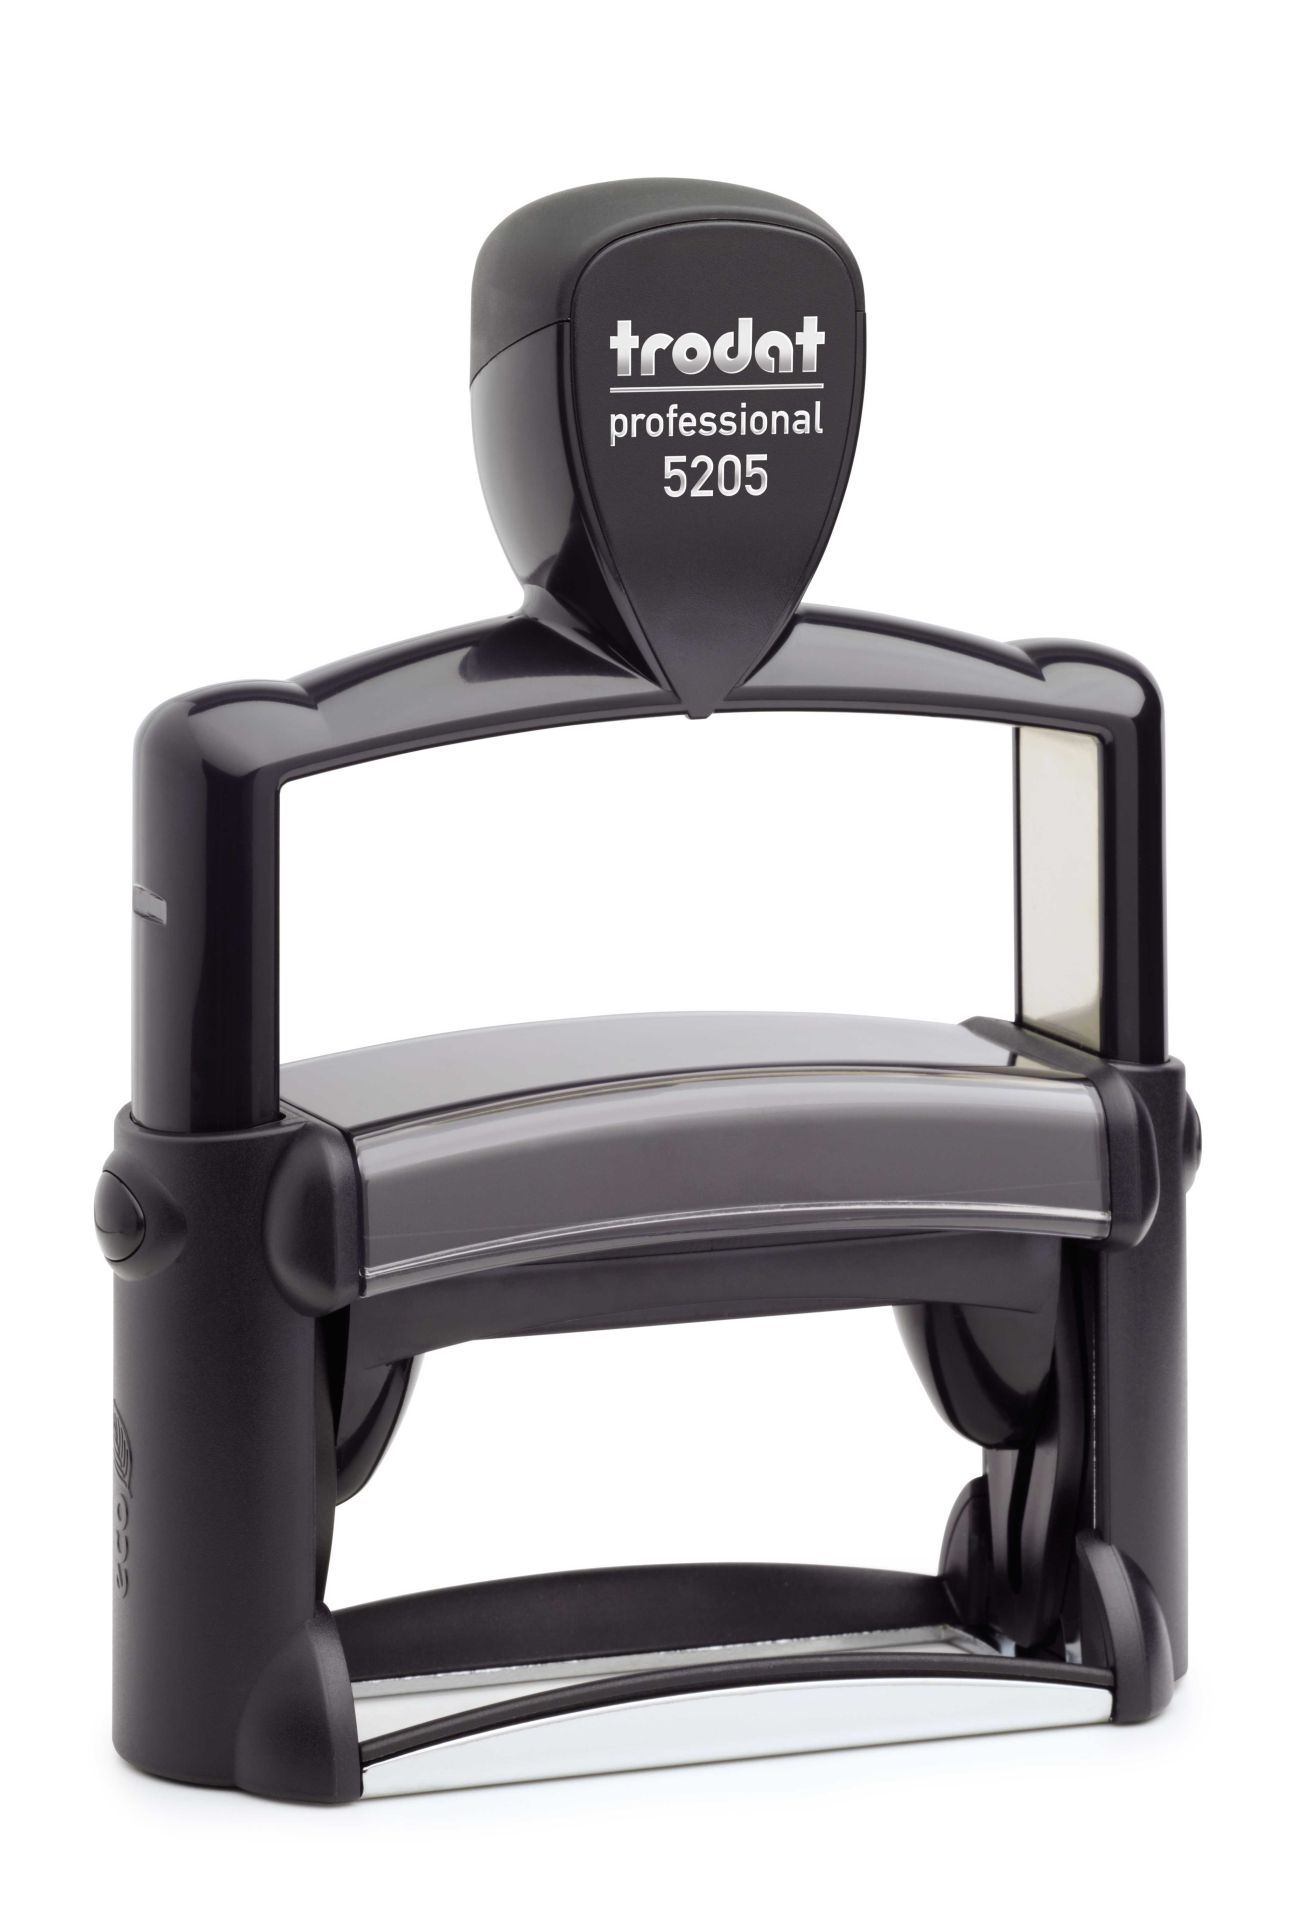 Trodat-Professional-5205-hochwertiger-Stempel-Abdruckgroesse-68x24mm